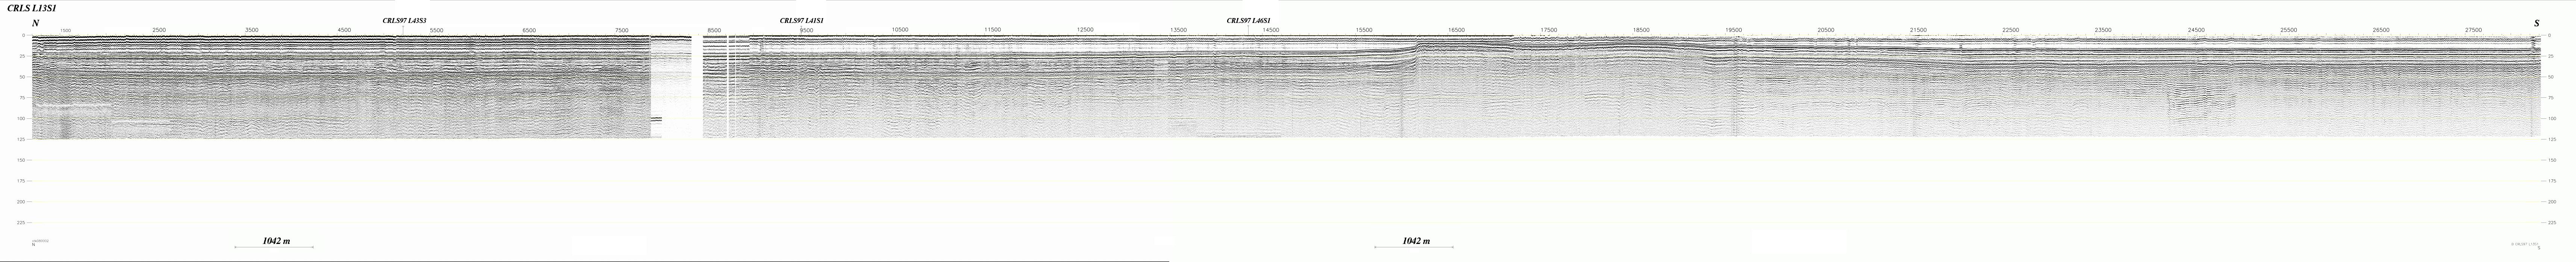 Seismic Reflection Profile Line No.: L13s1 (832835 bytes)